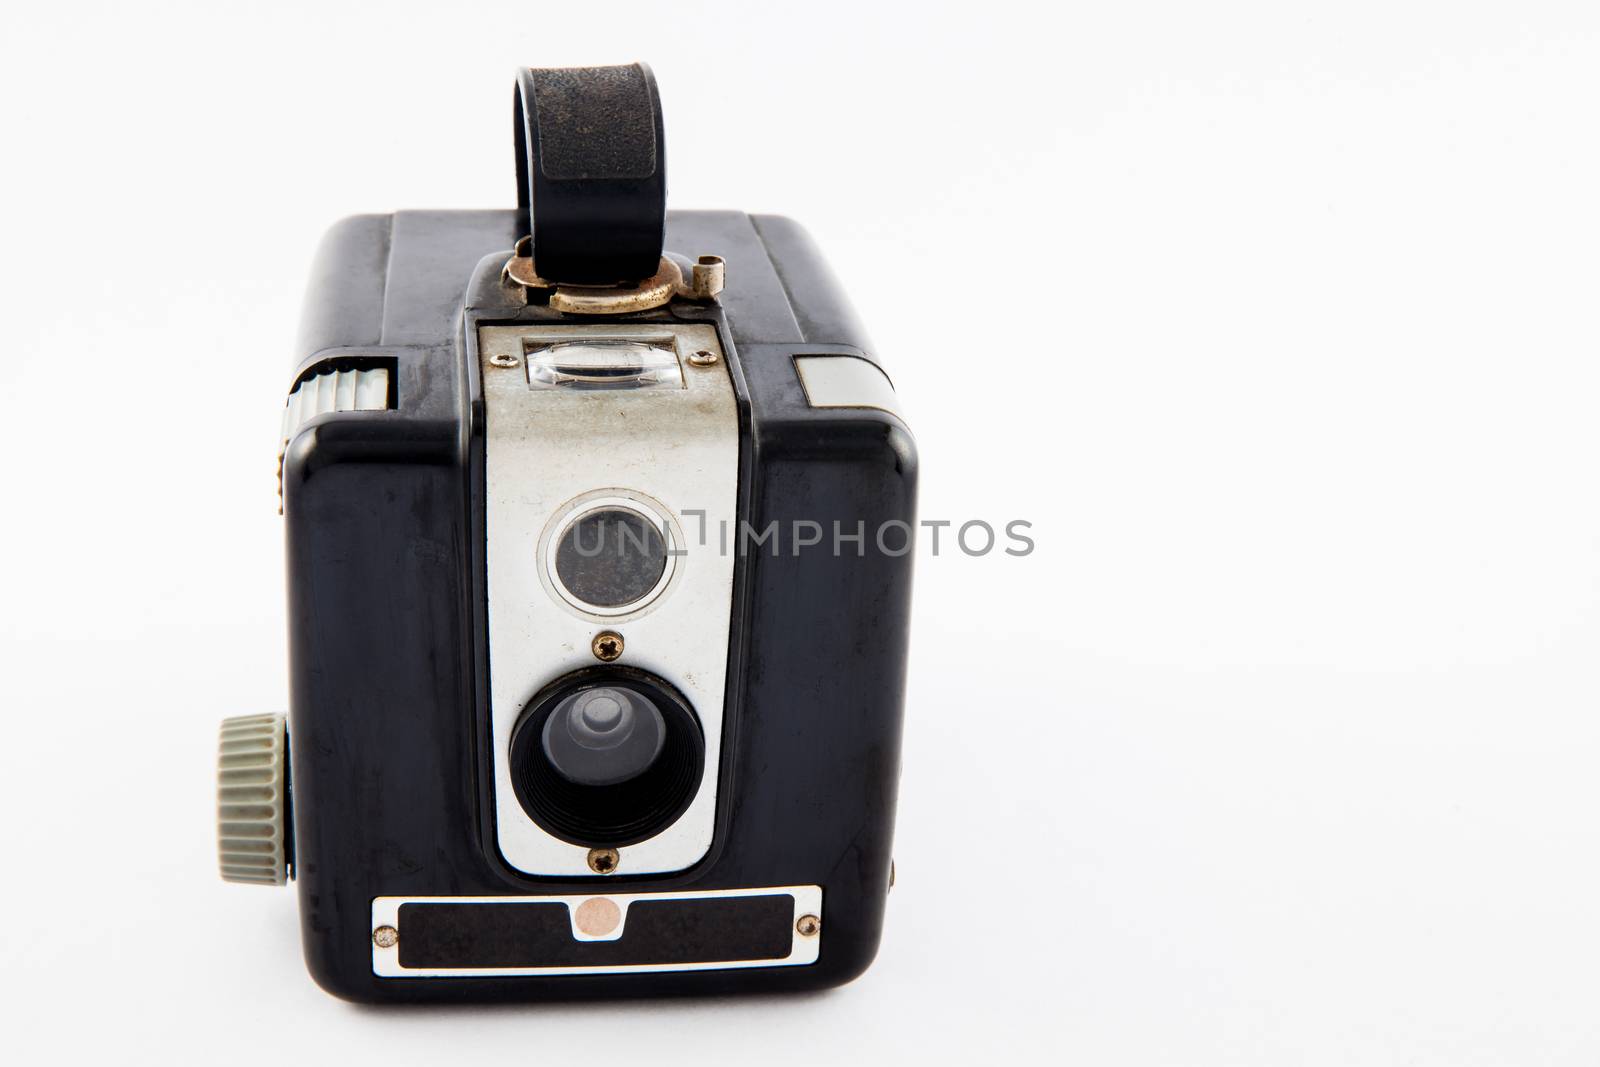 Antique camera isolated on white background